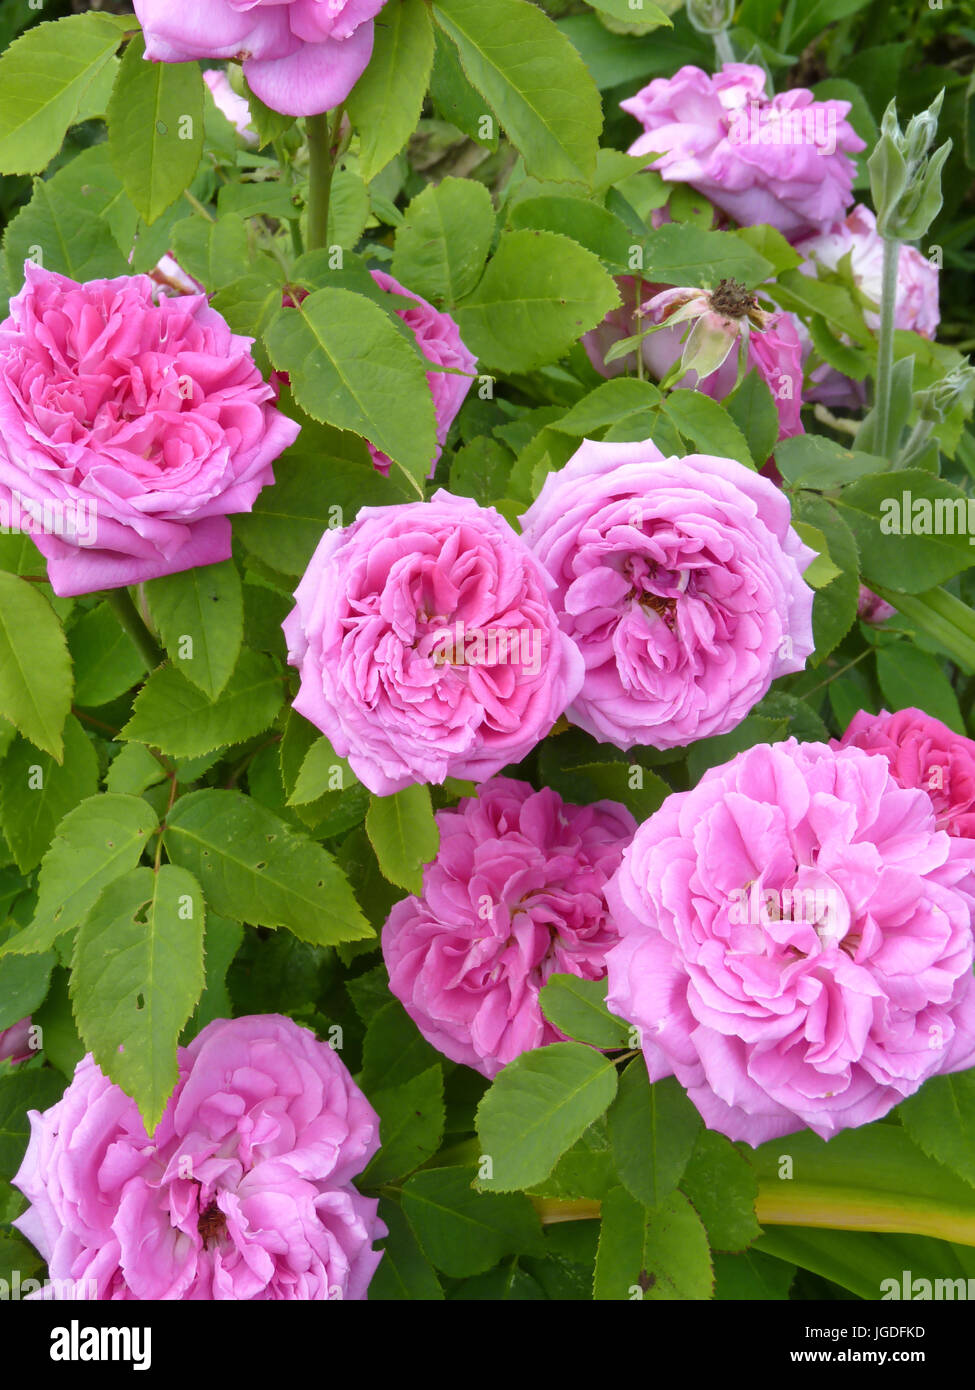 Pink rose flowers in full bloom in garden or park Stock Photo